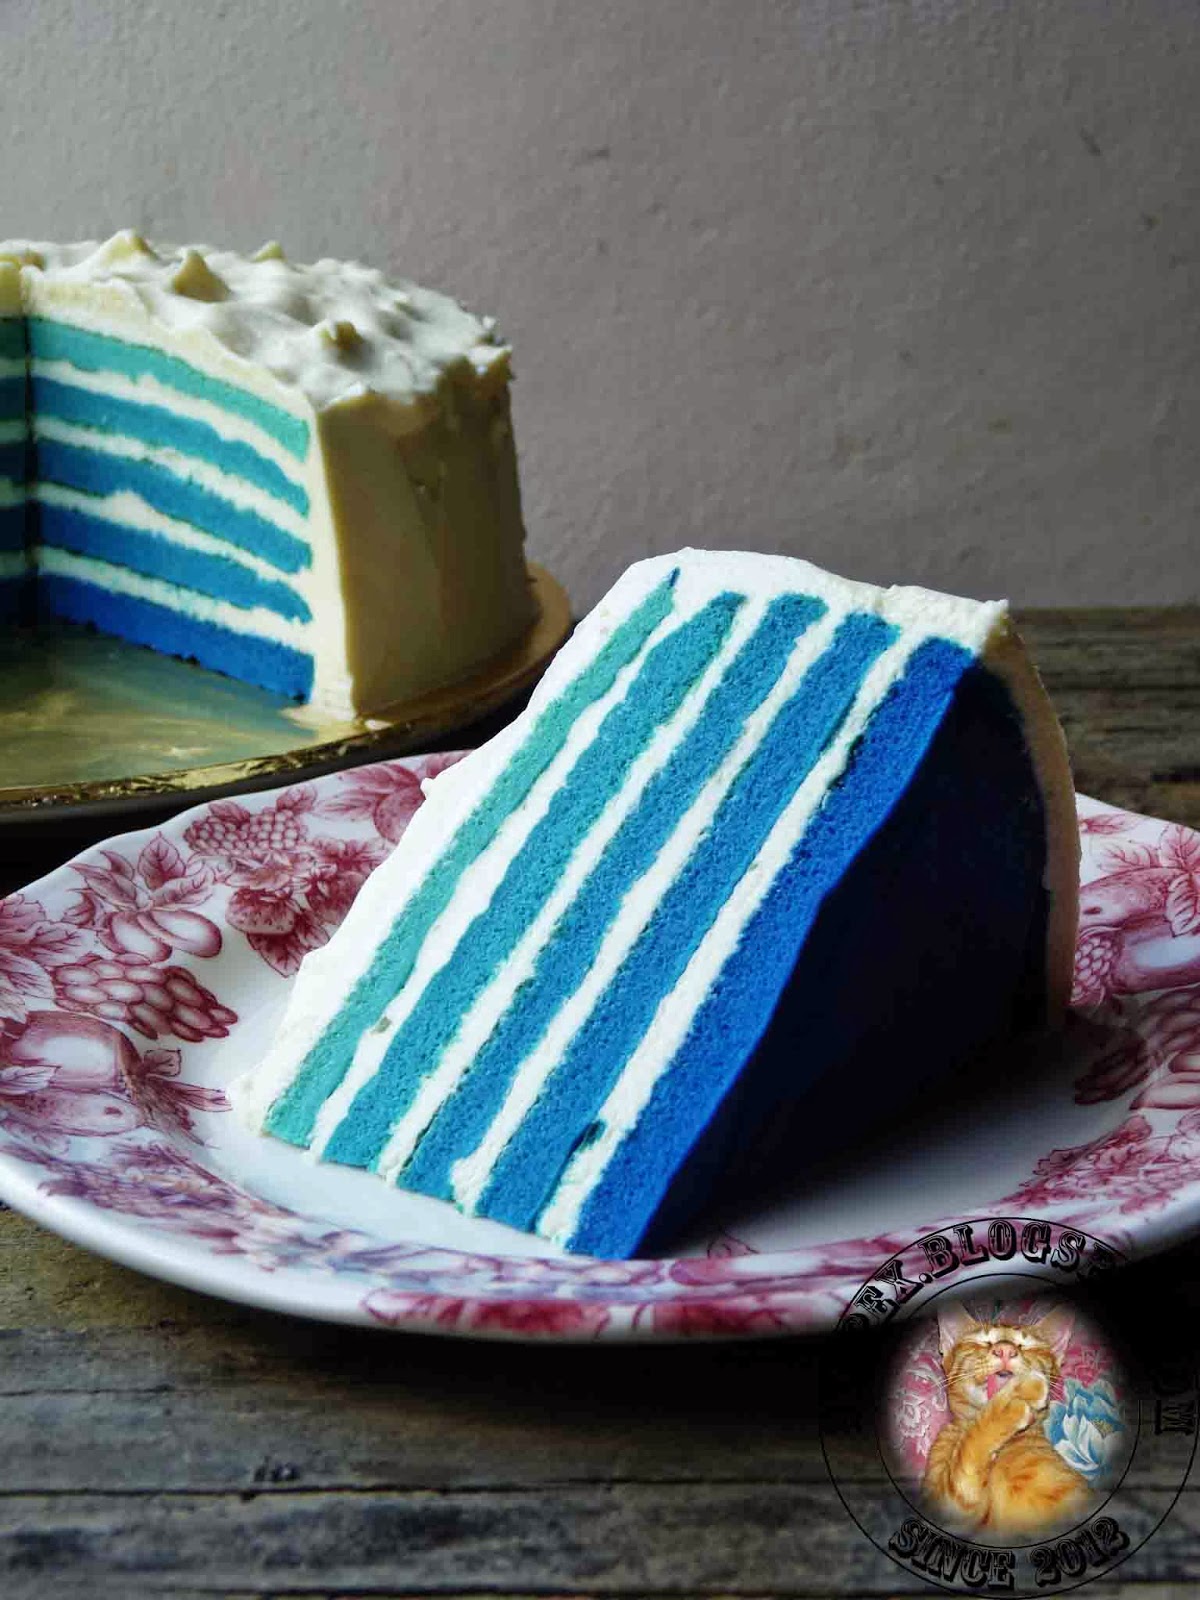 Syapex kitchen: Blue Ombre Cake